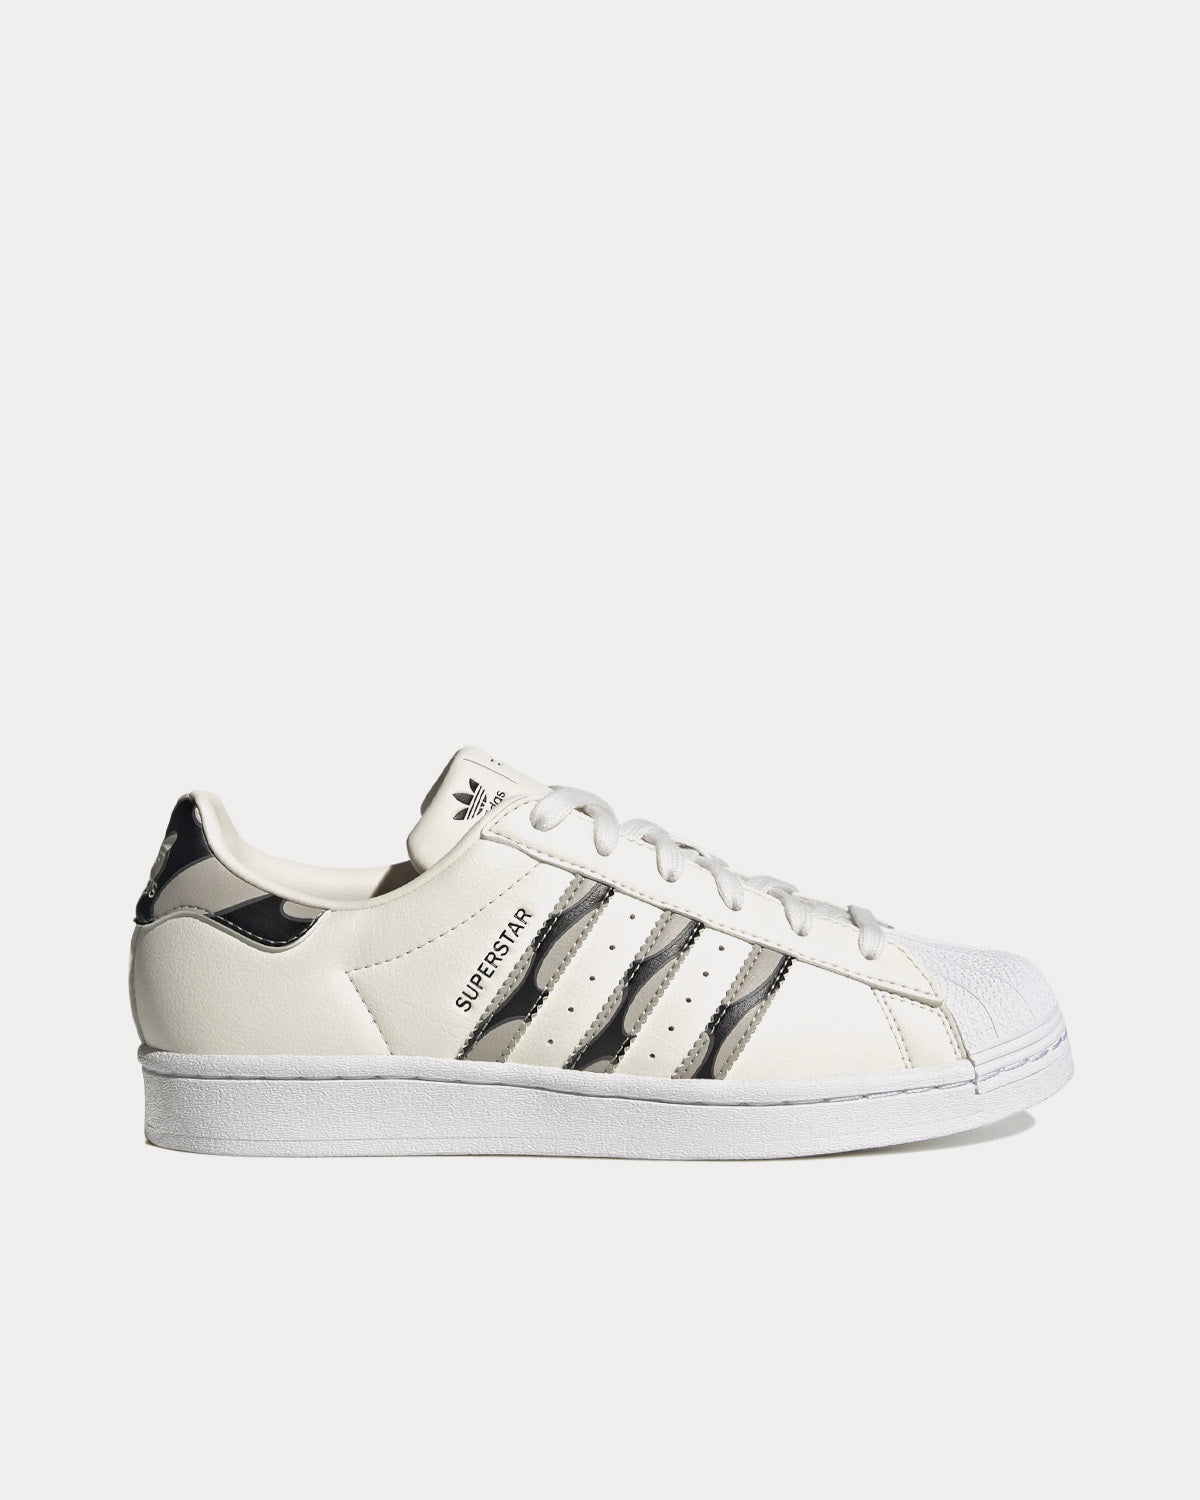 Adidas x Marimekko - Superstar Cloud White / Core Black / Grey Six Low Top Sneakers